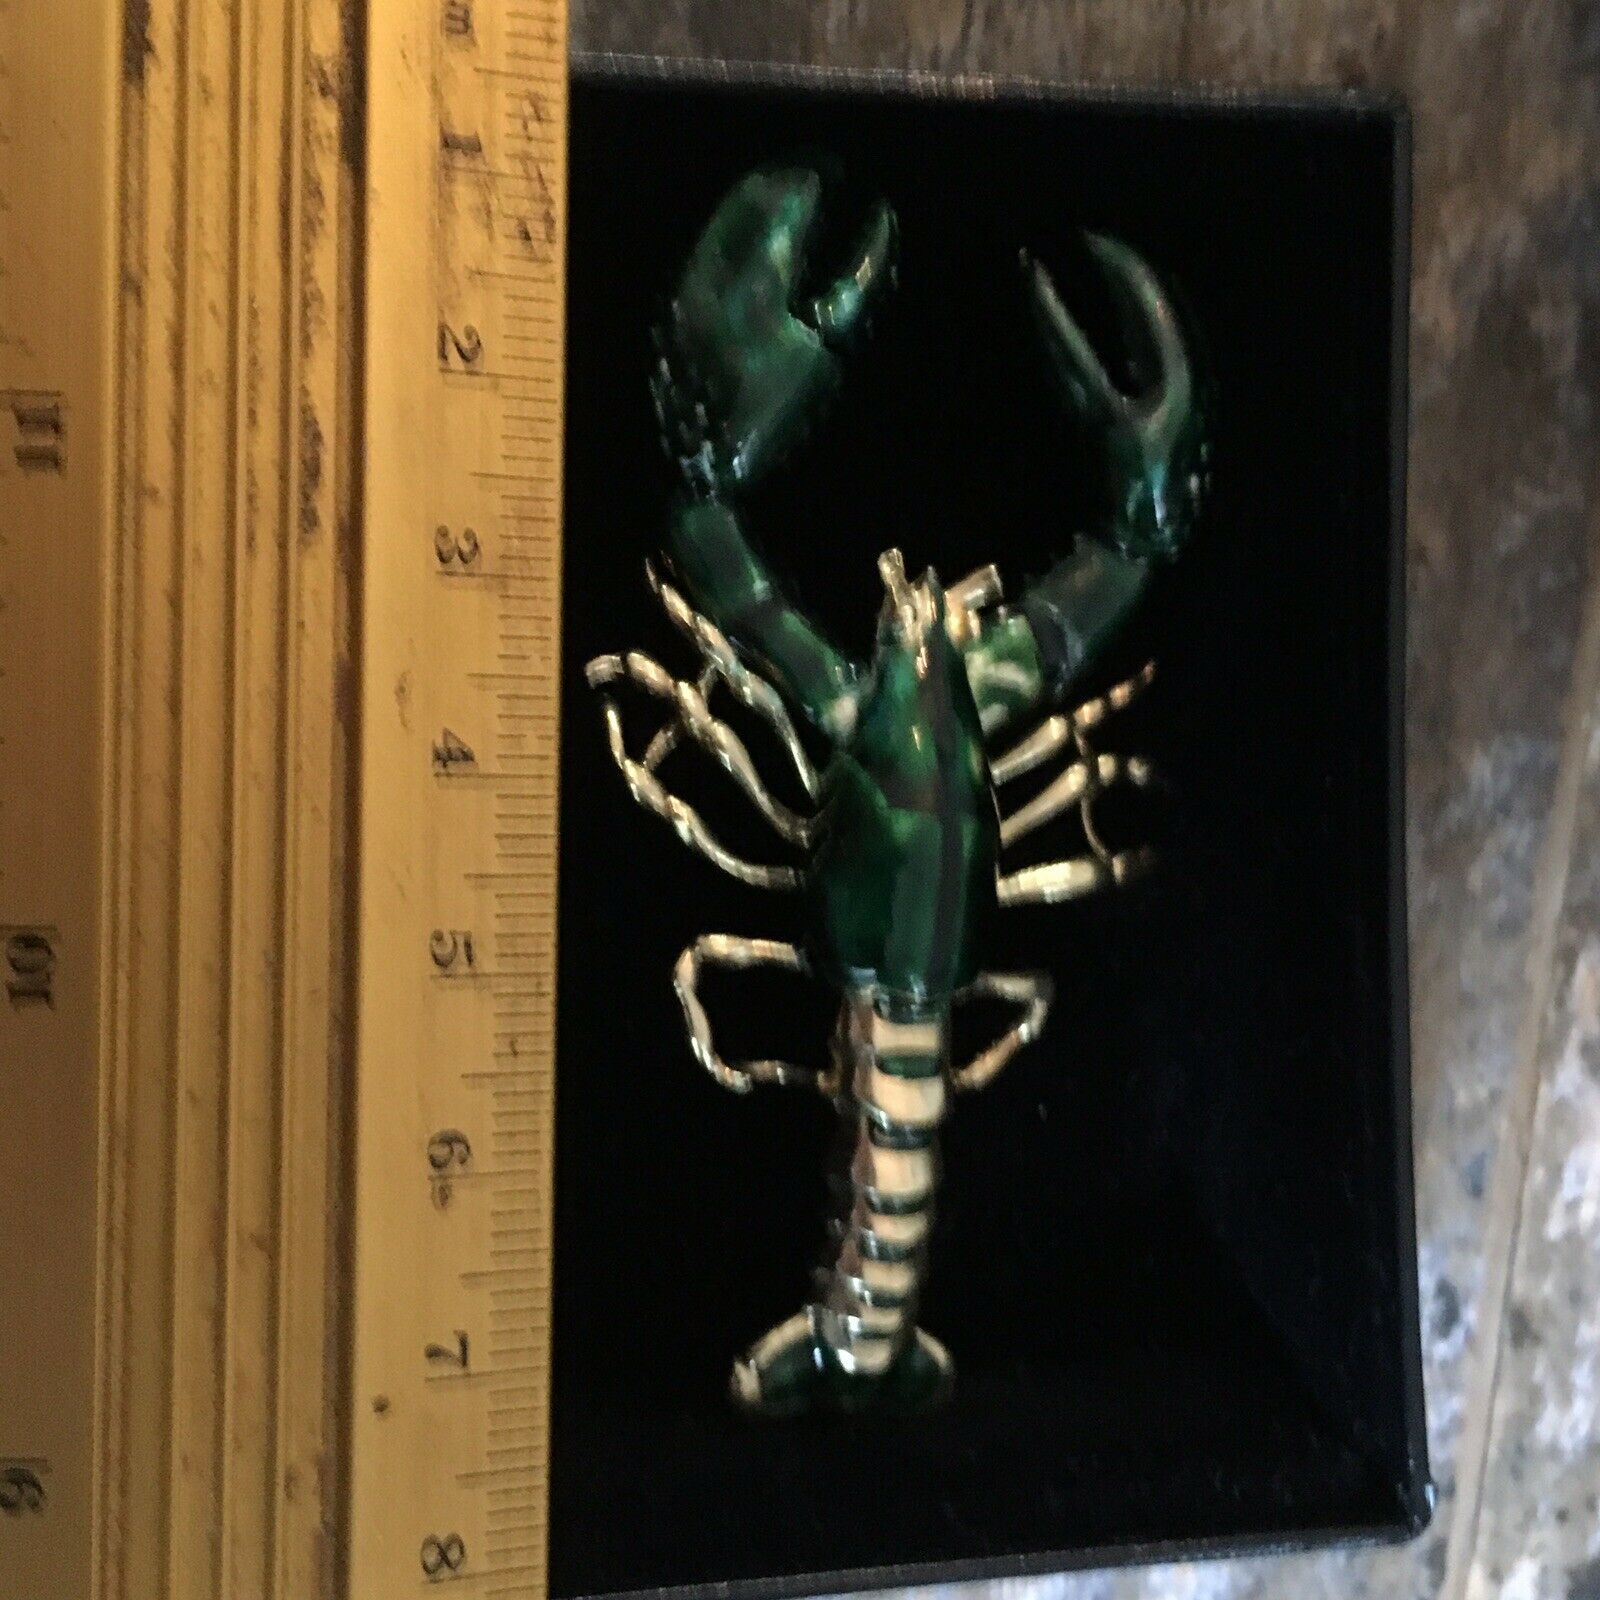 Italian Vintage 18k Gold & Green Enamel  Lobster Brooch Pendant Pin Large 17.2g